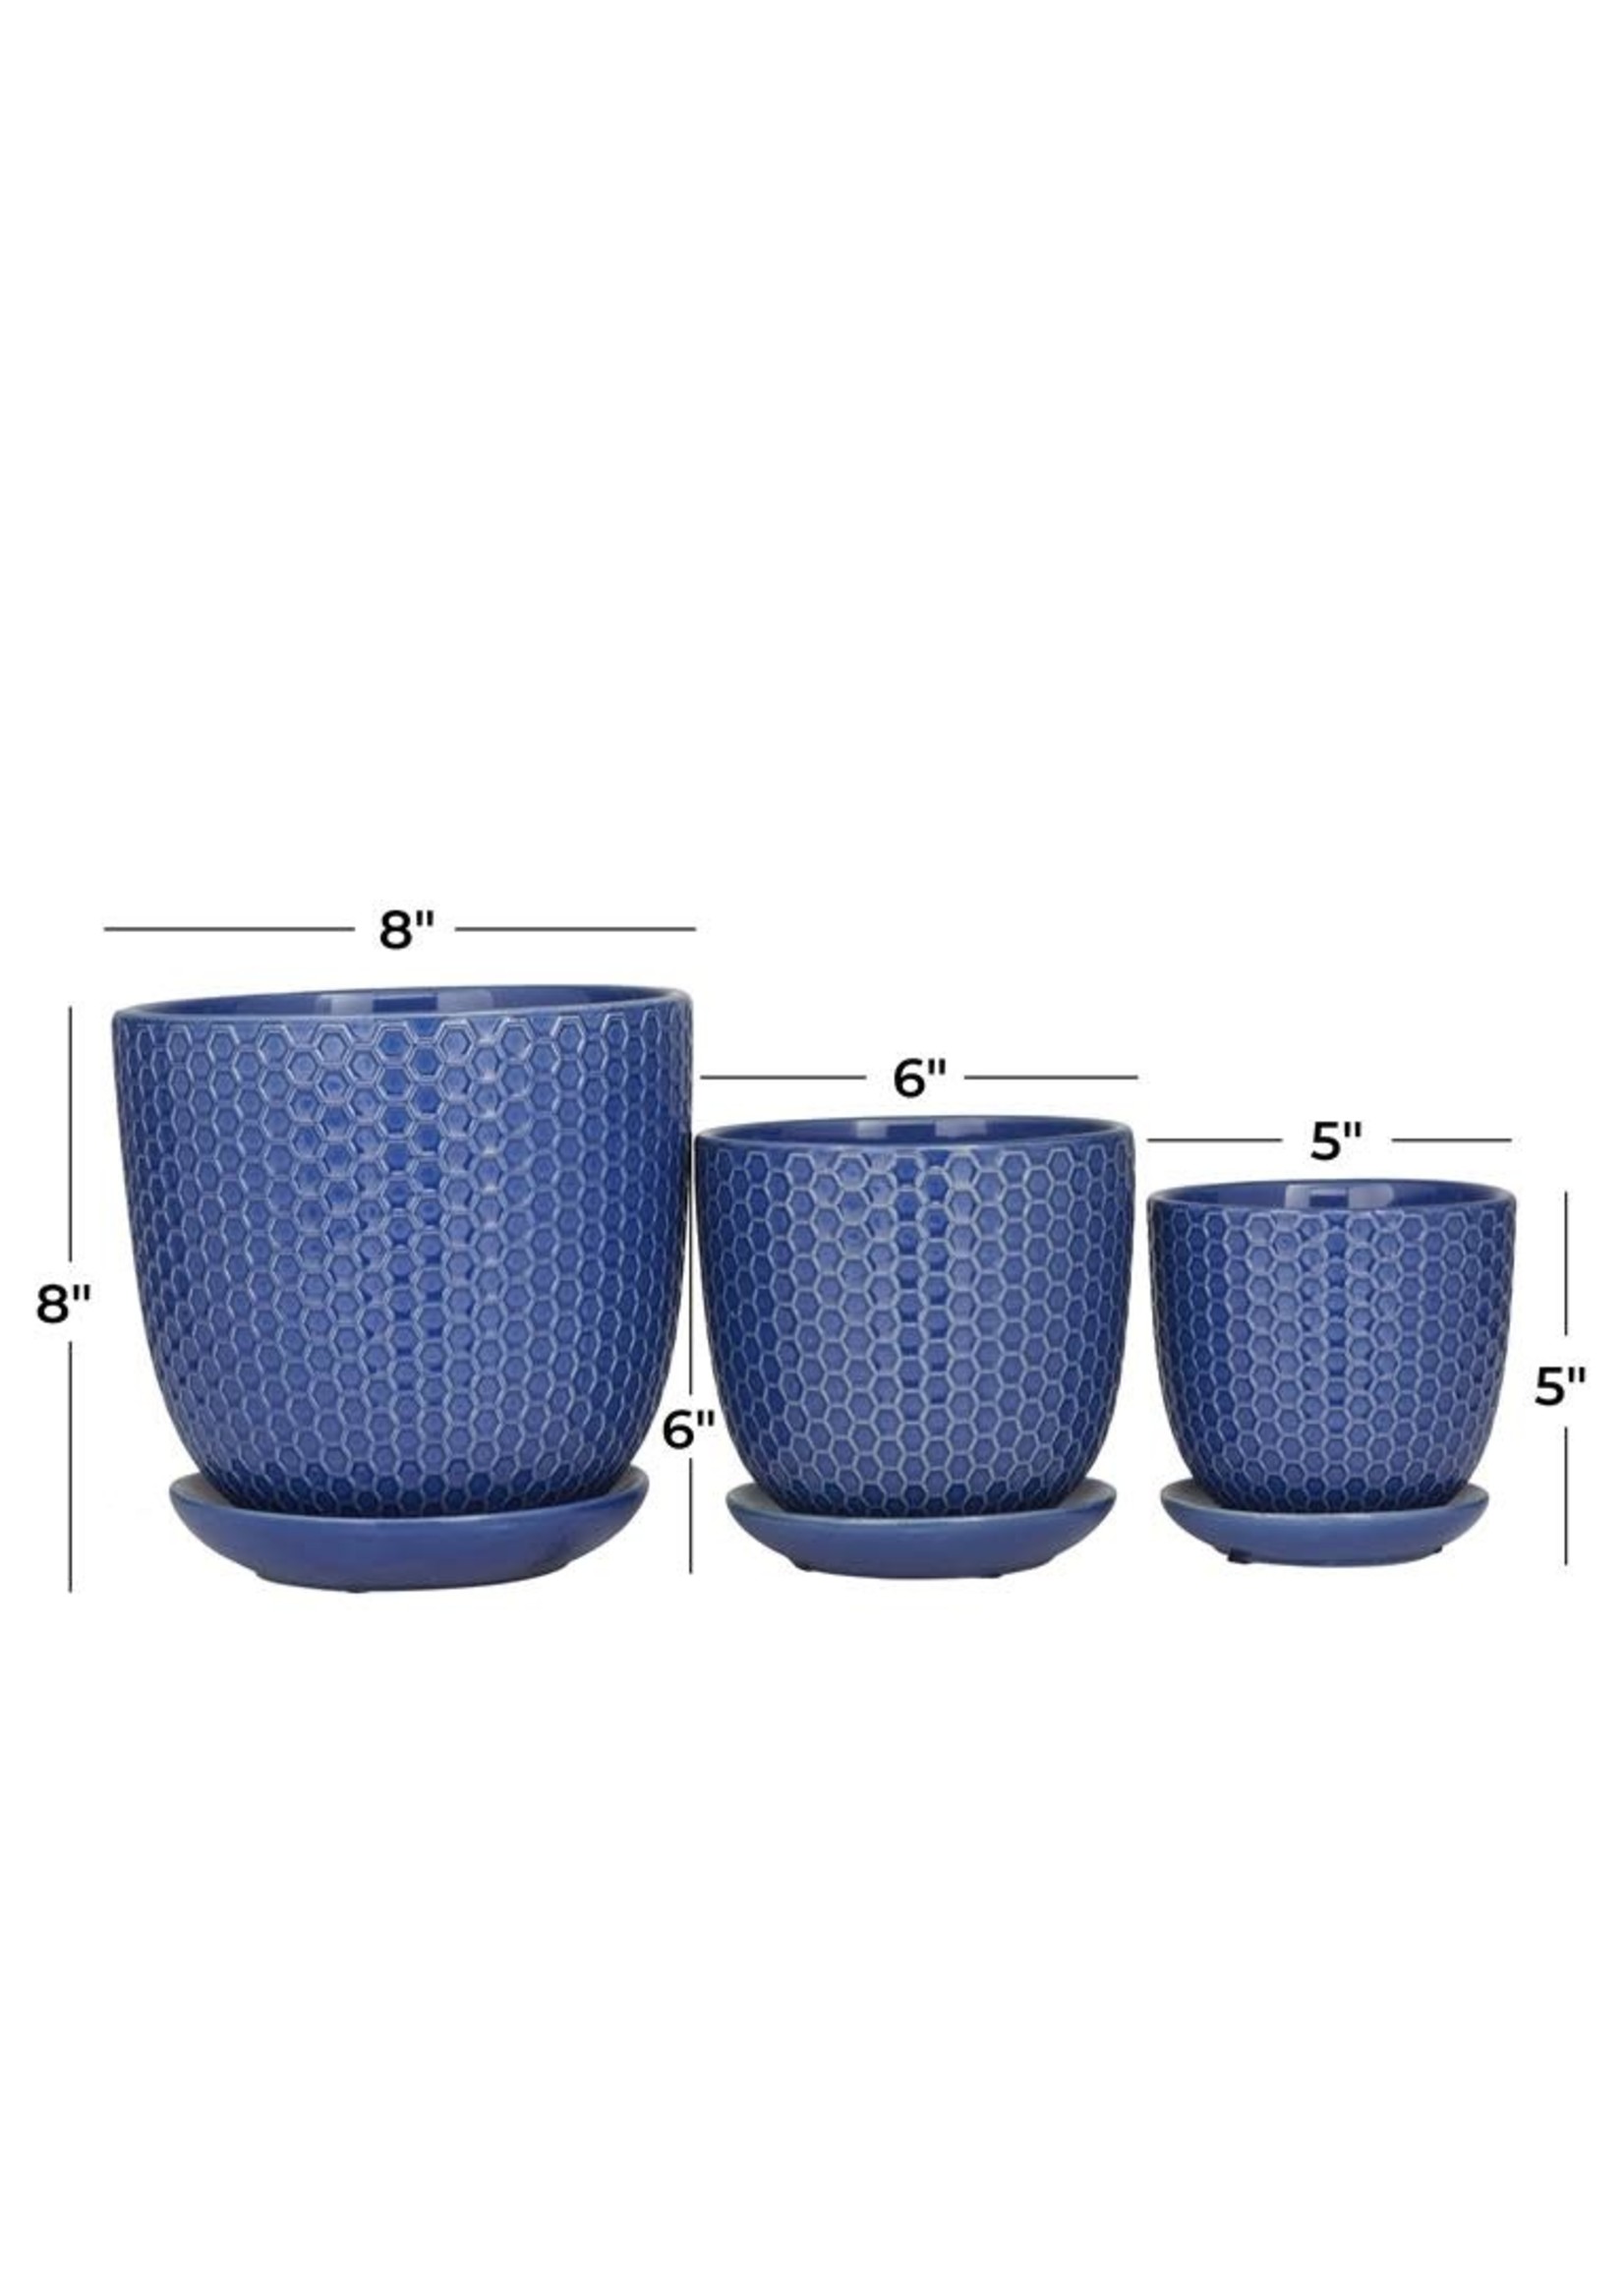 UMA Enterprises 98363 Set/3 Blue Porcelain Transitional Planter, 8" x 8" x 8"